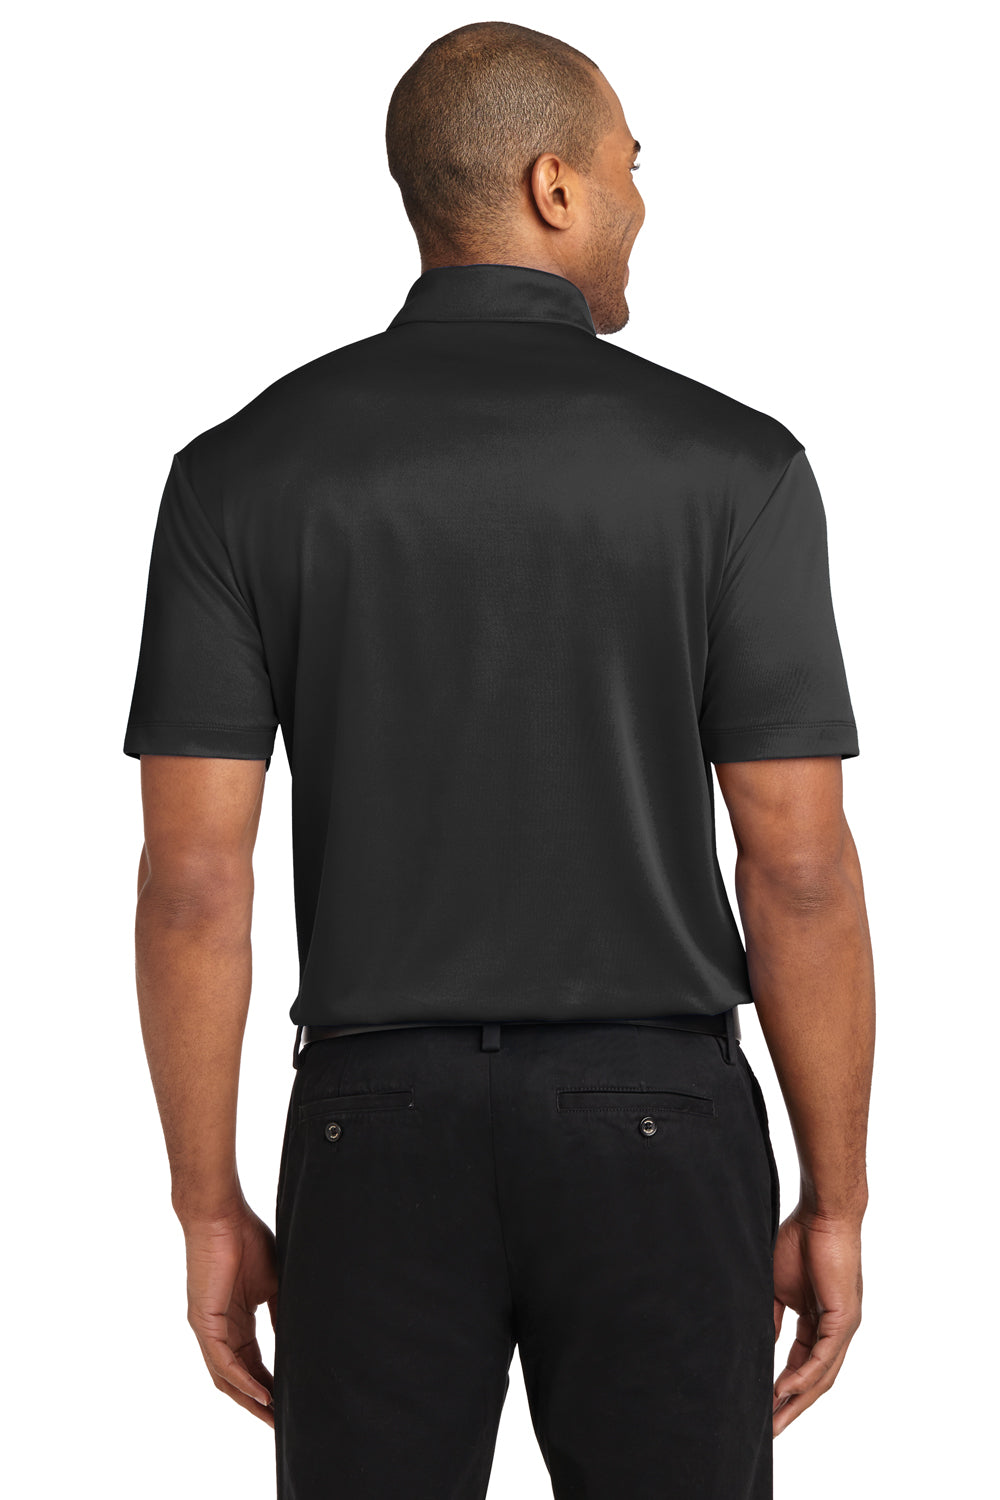 Port Authority K540P Mens Silk Touch Performance Moisture Wicking Short Sleeve Polo Shirt w/ Pocket Black Back